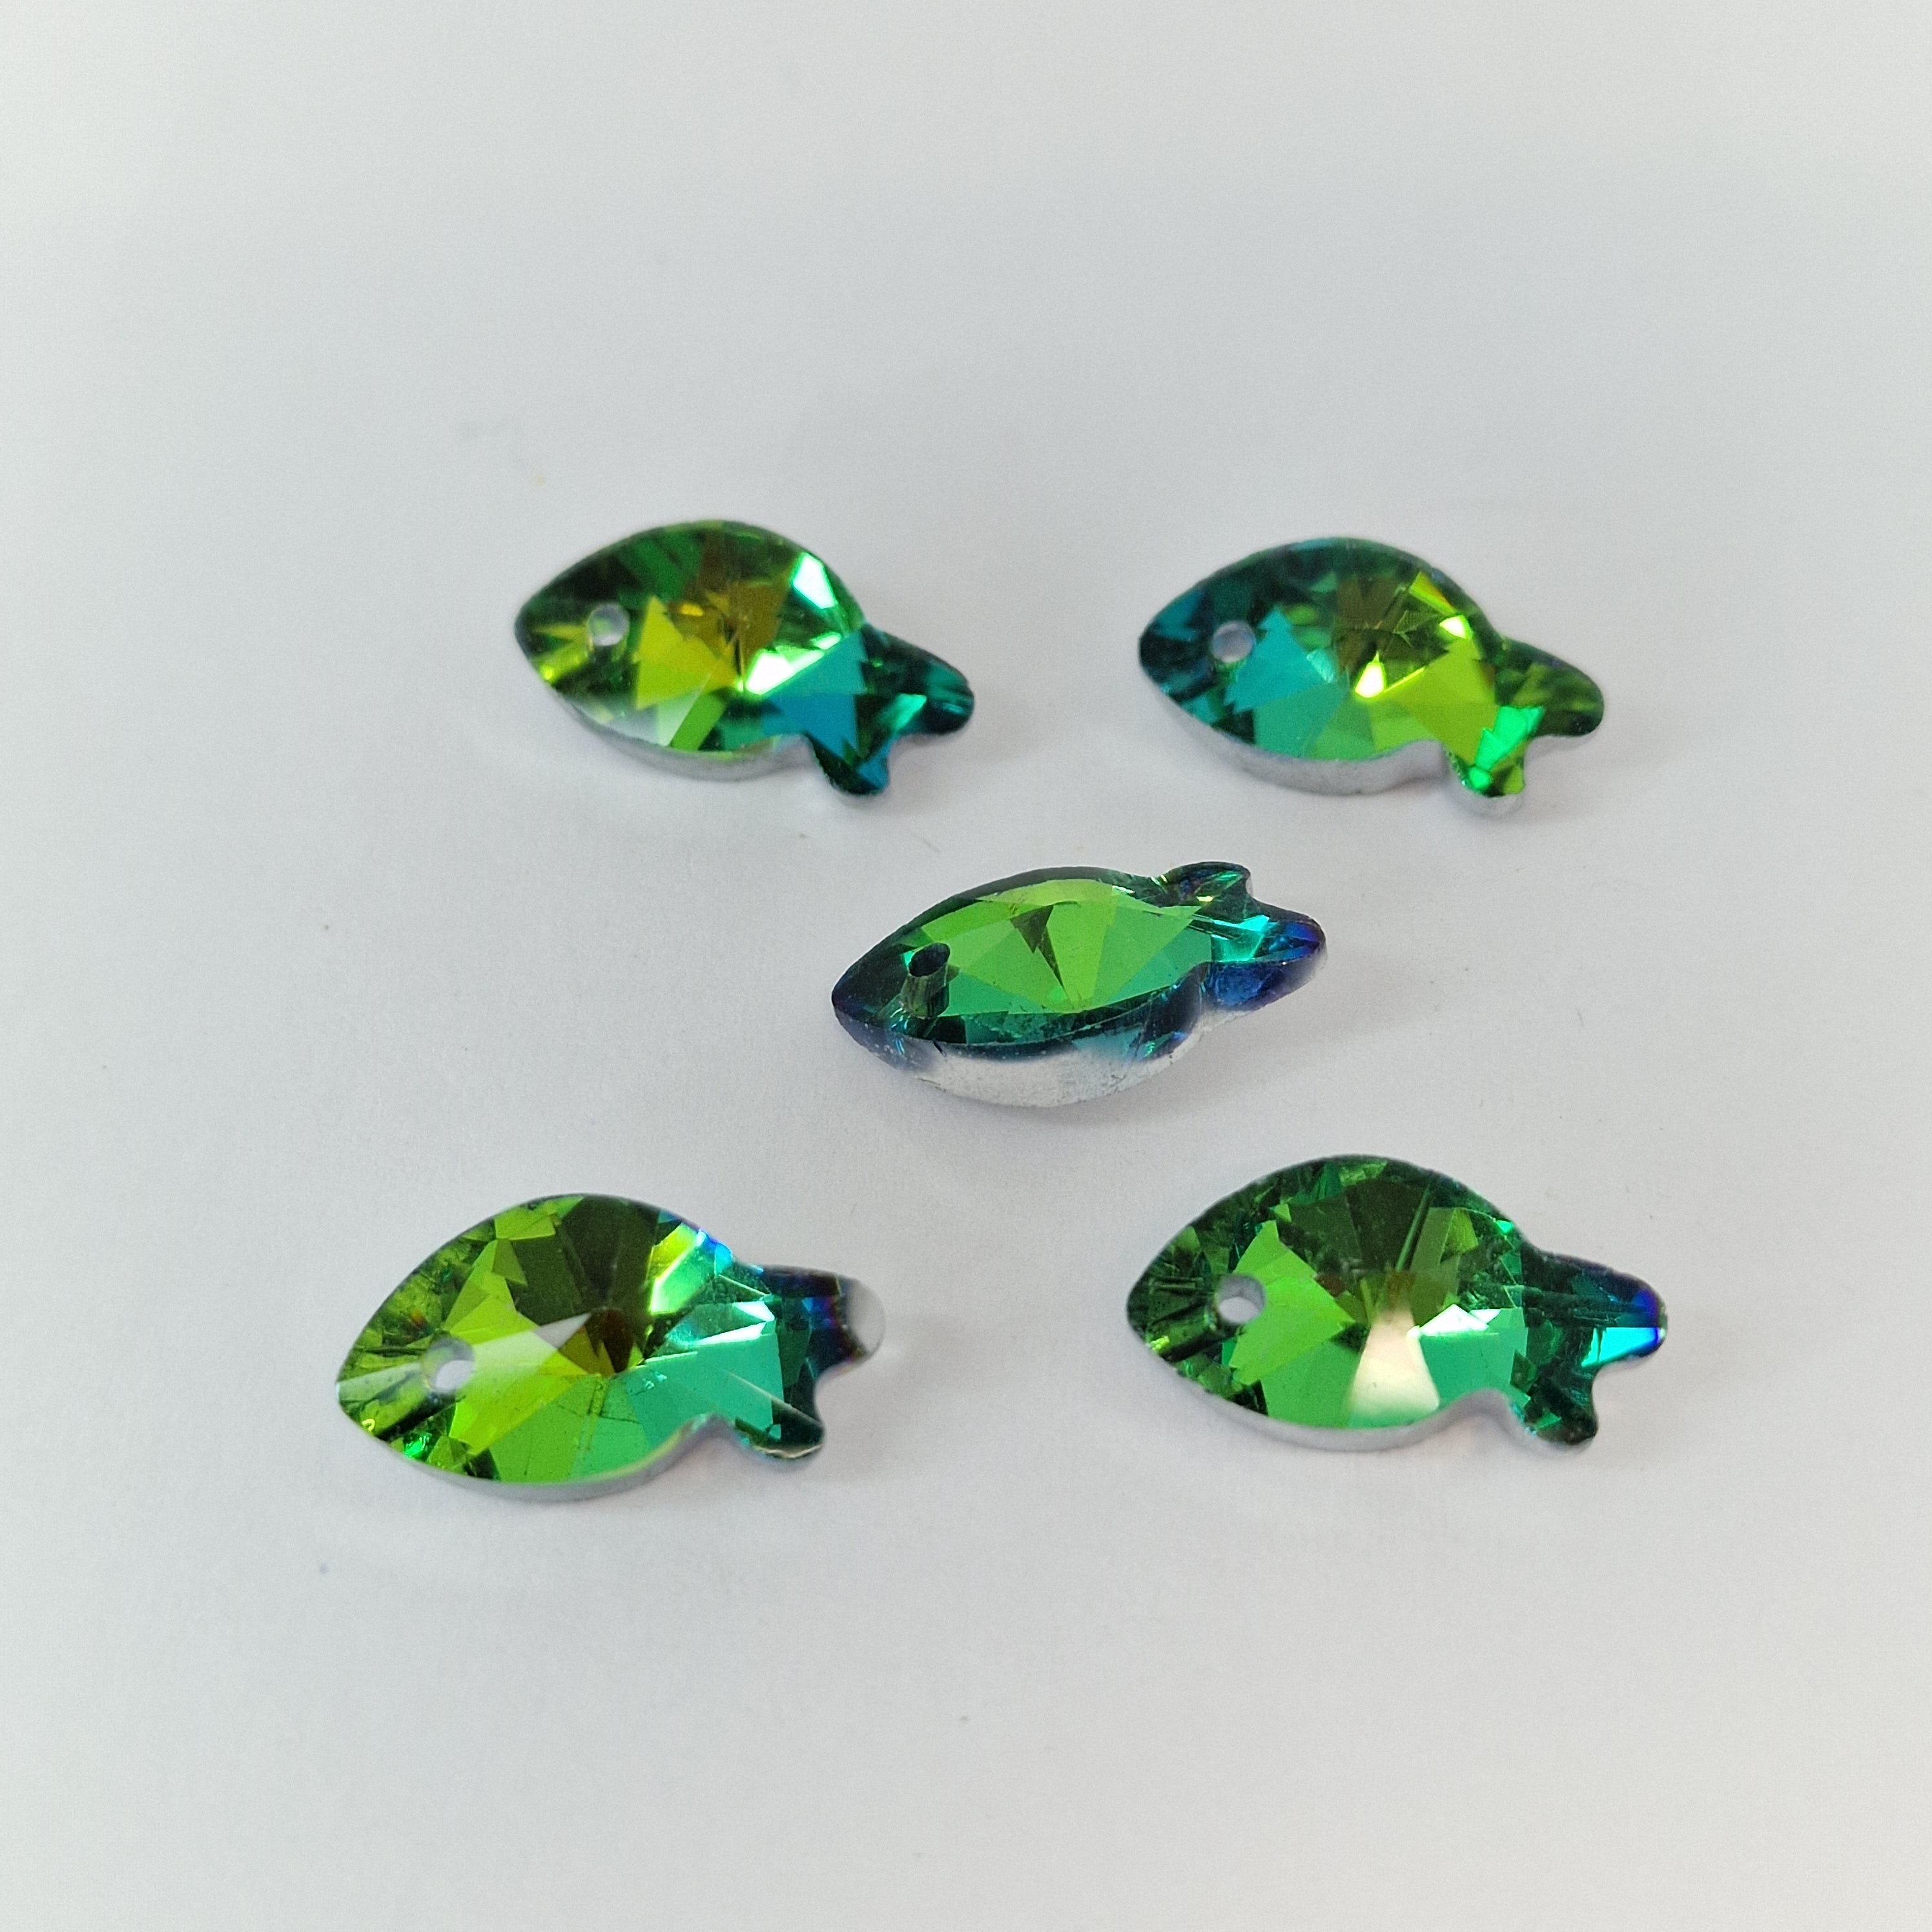 MajorCrafts 20pcs 17mm Yellow Green Fish Shaped Glass Crystal Pendant Beads